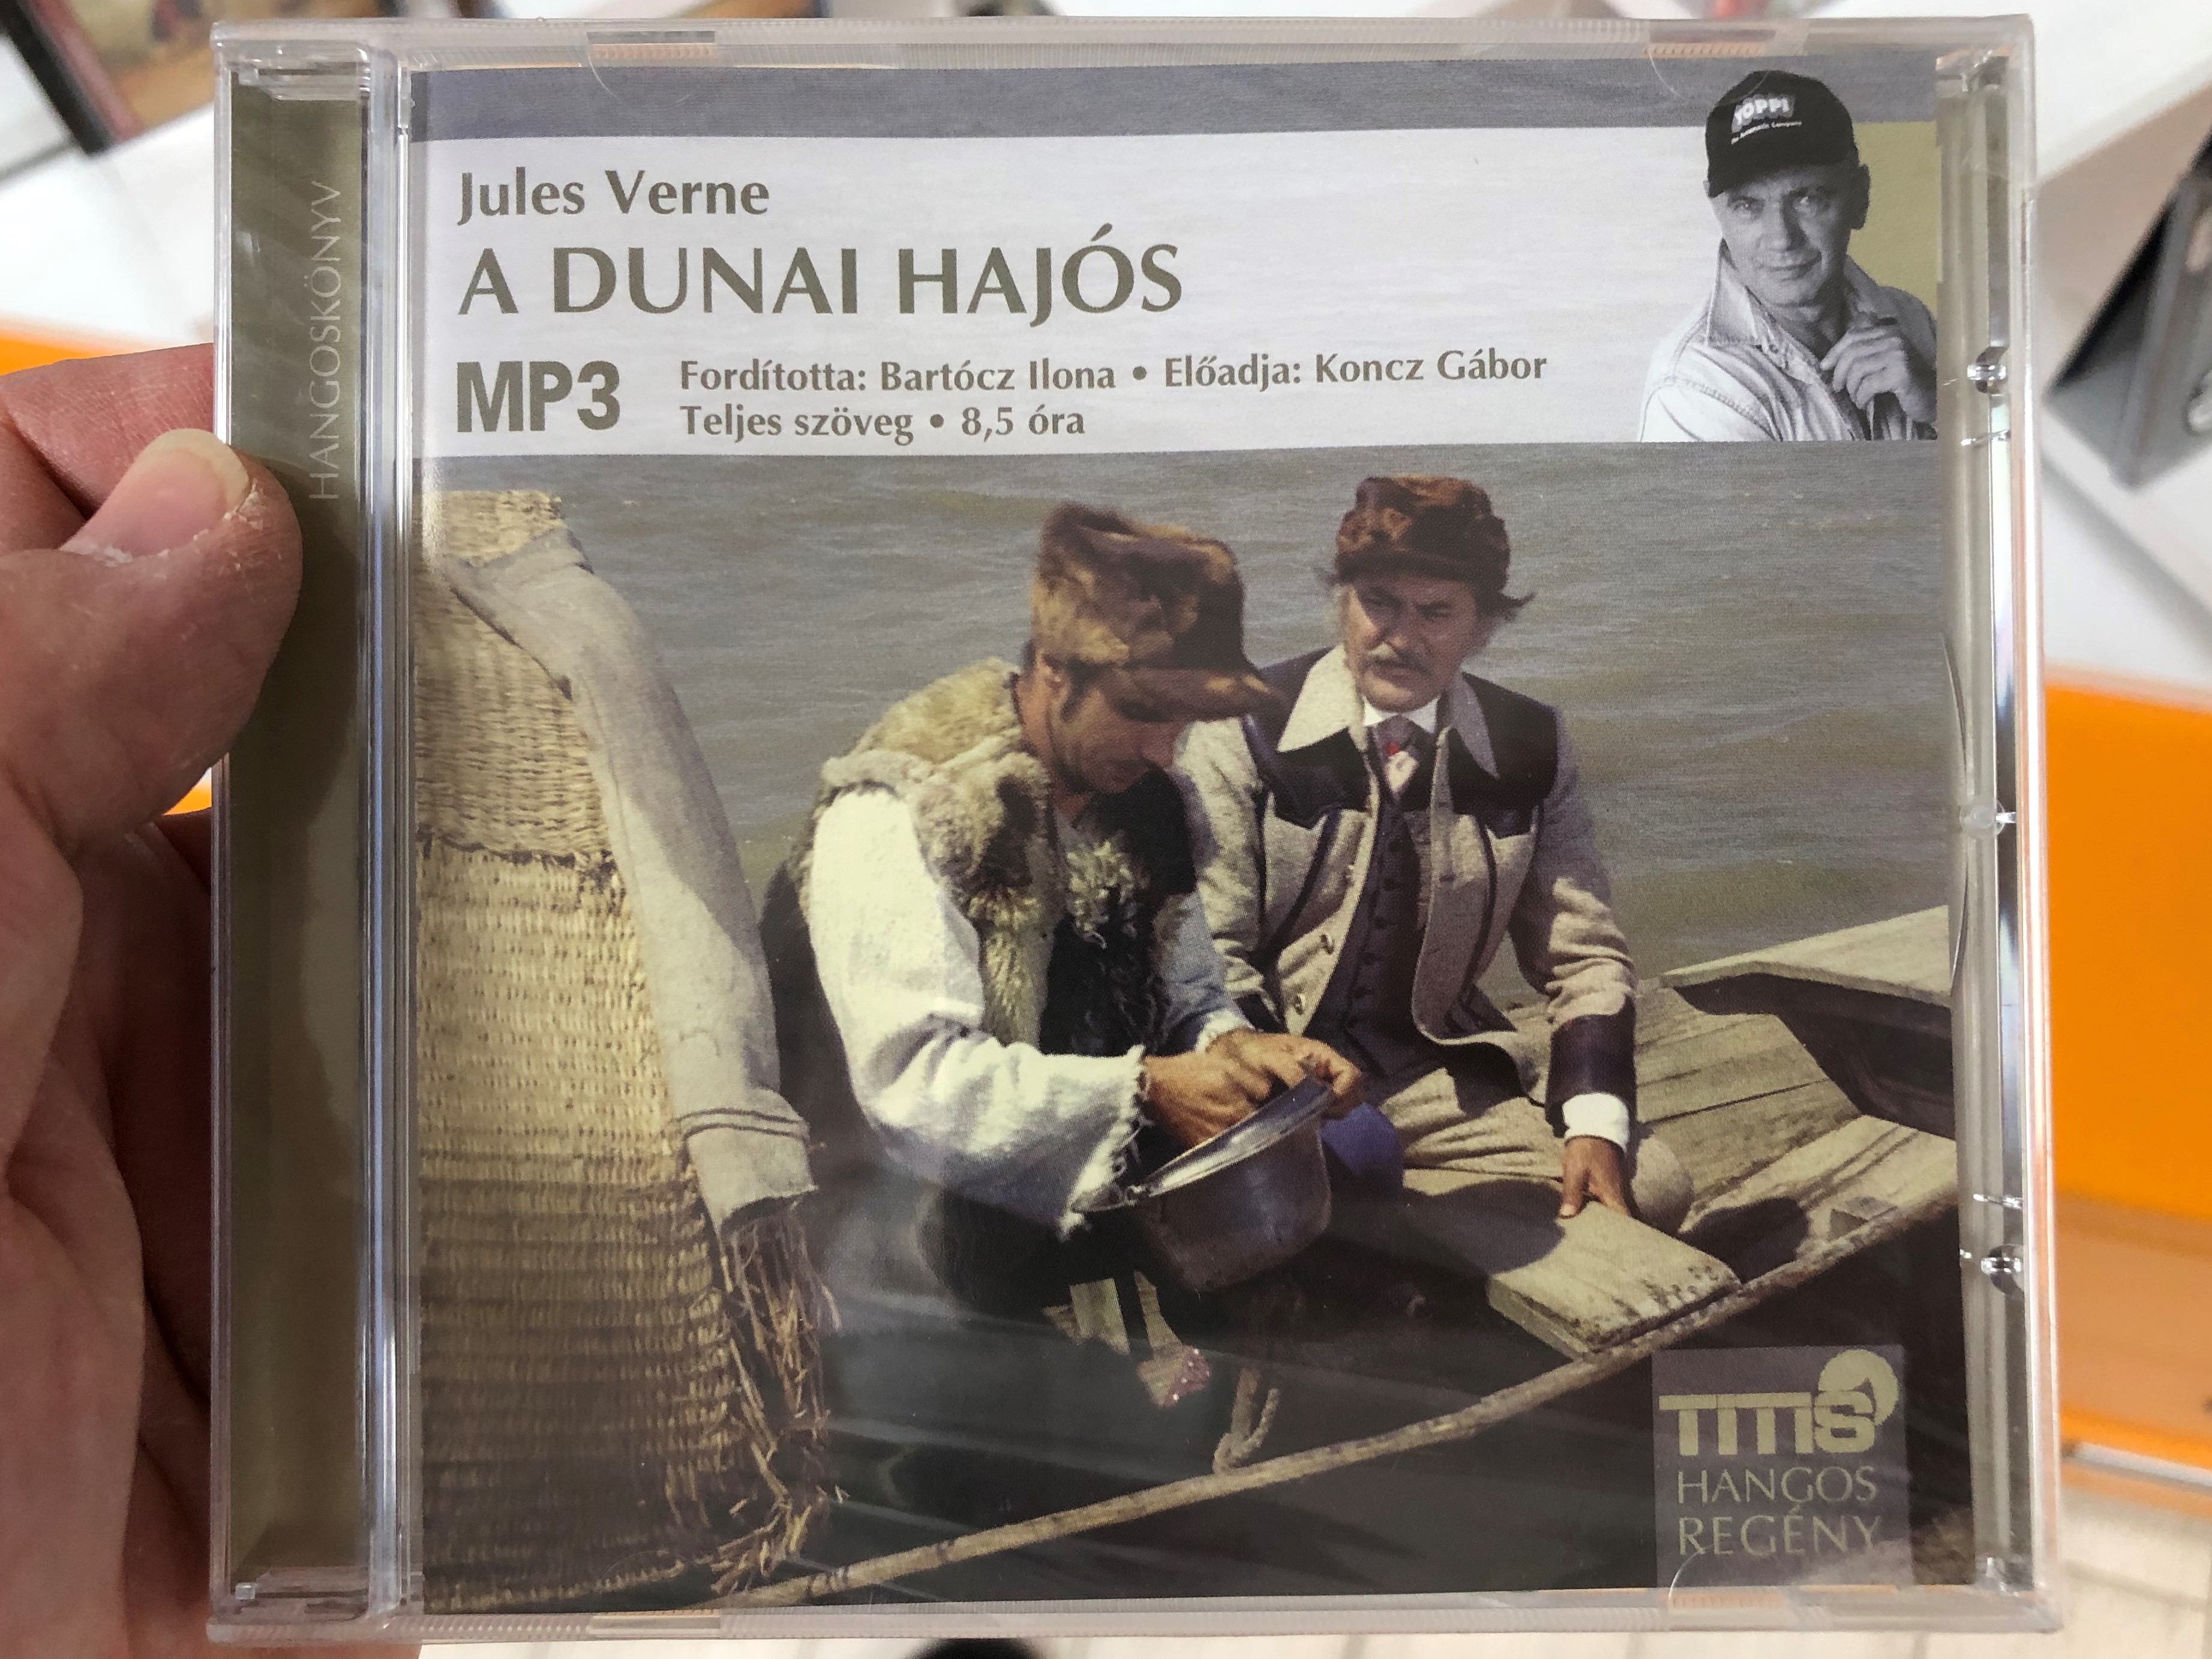 A dunai hajós by Jules Verne / Hungarian Audio edition of The Danube Pilot  (Le pilote du Danube) / Fordította Bartócz Ilona / Read by Koncz Gábor  előadásában / Titis Audio Novel /